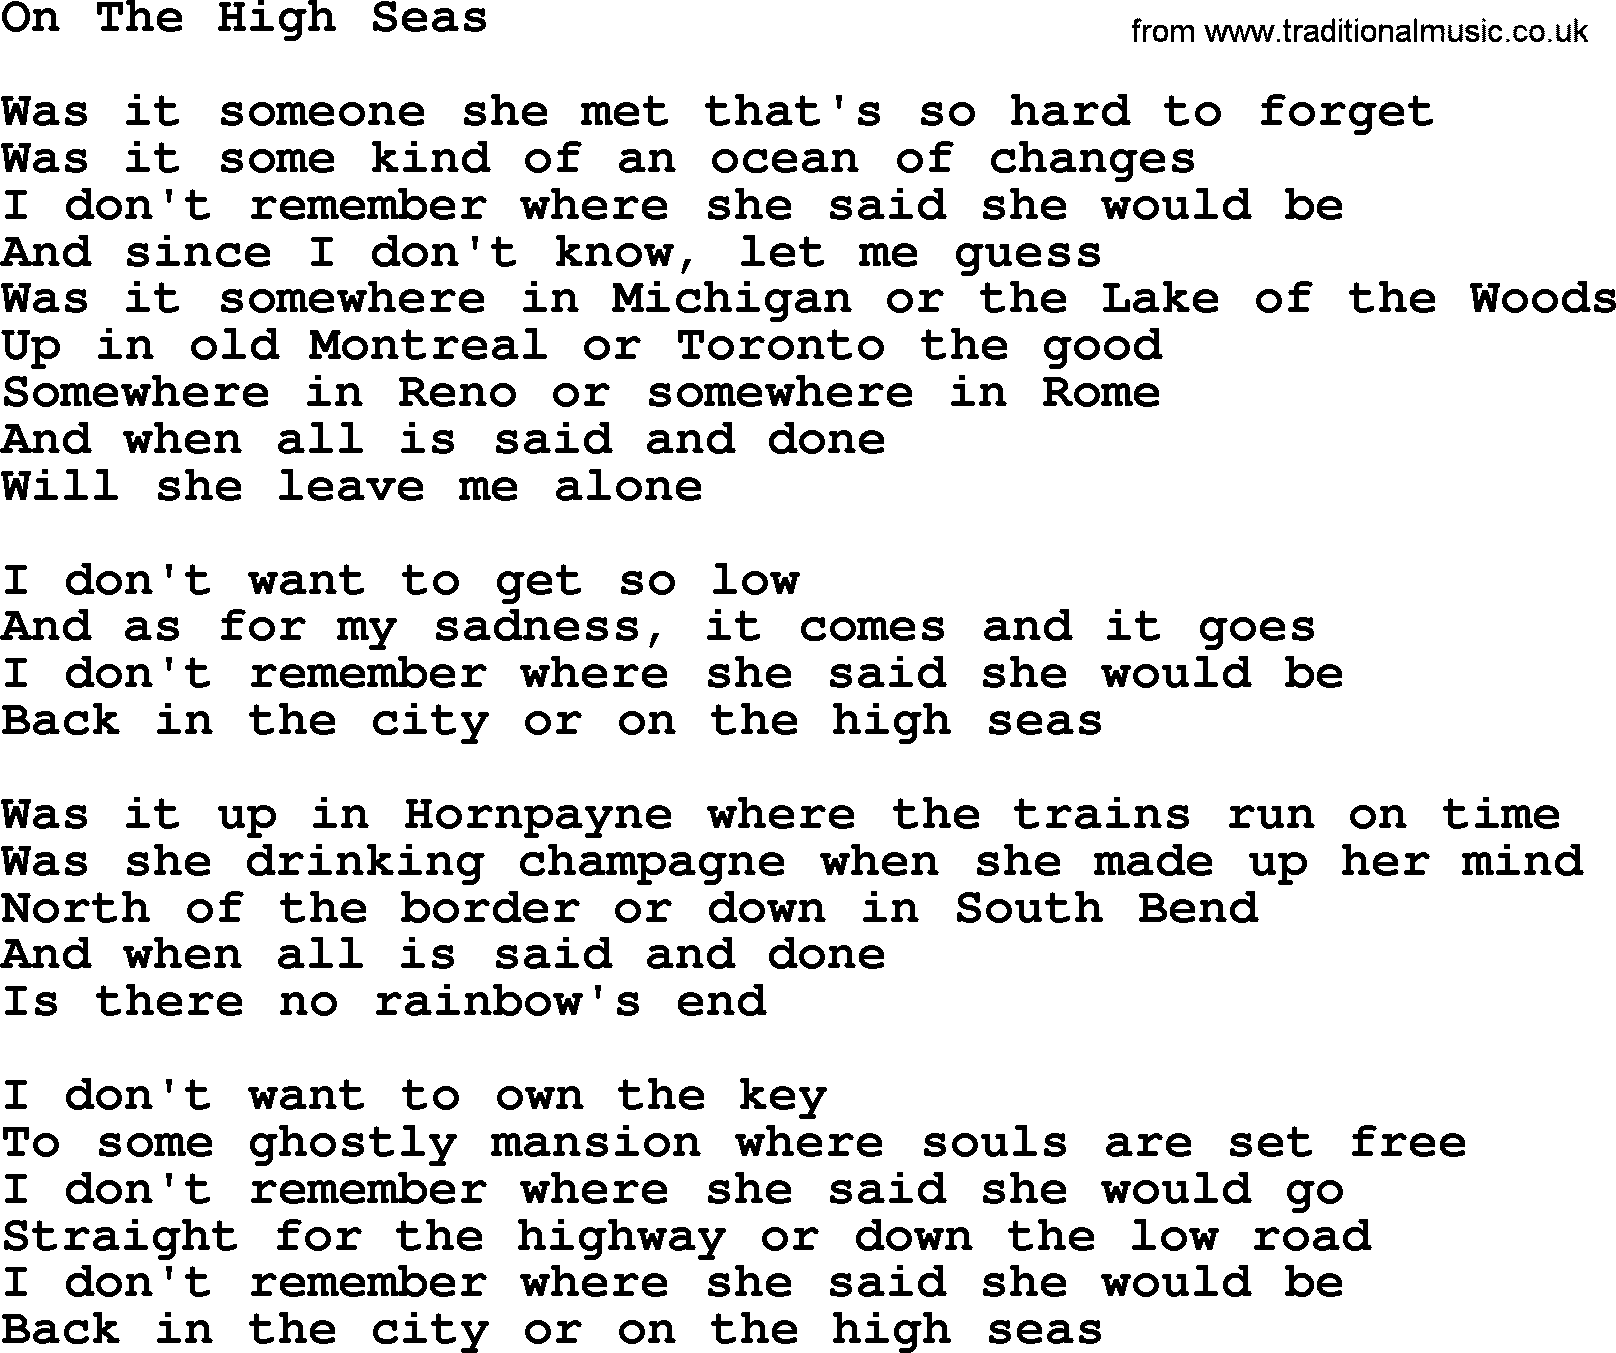 Gordon Lightfoot song On The High Seas, lyrics